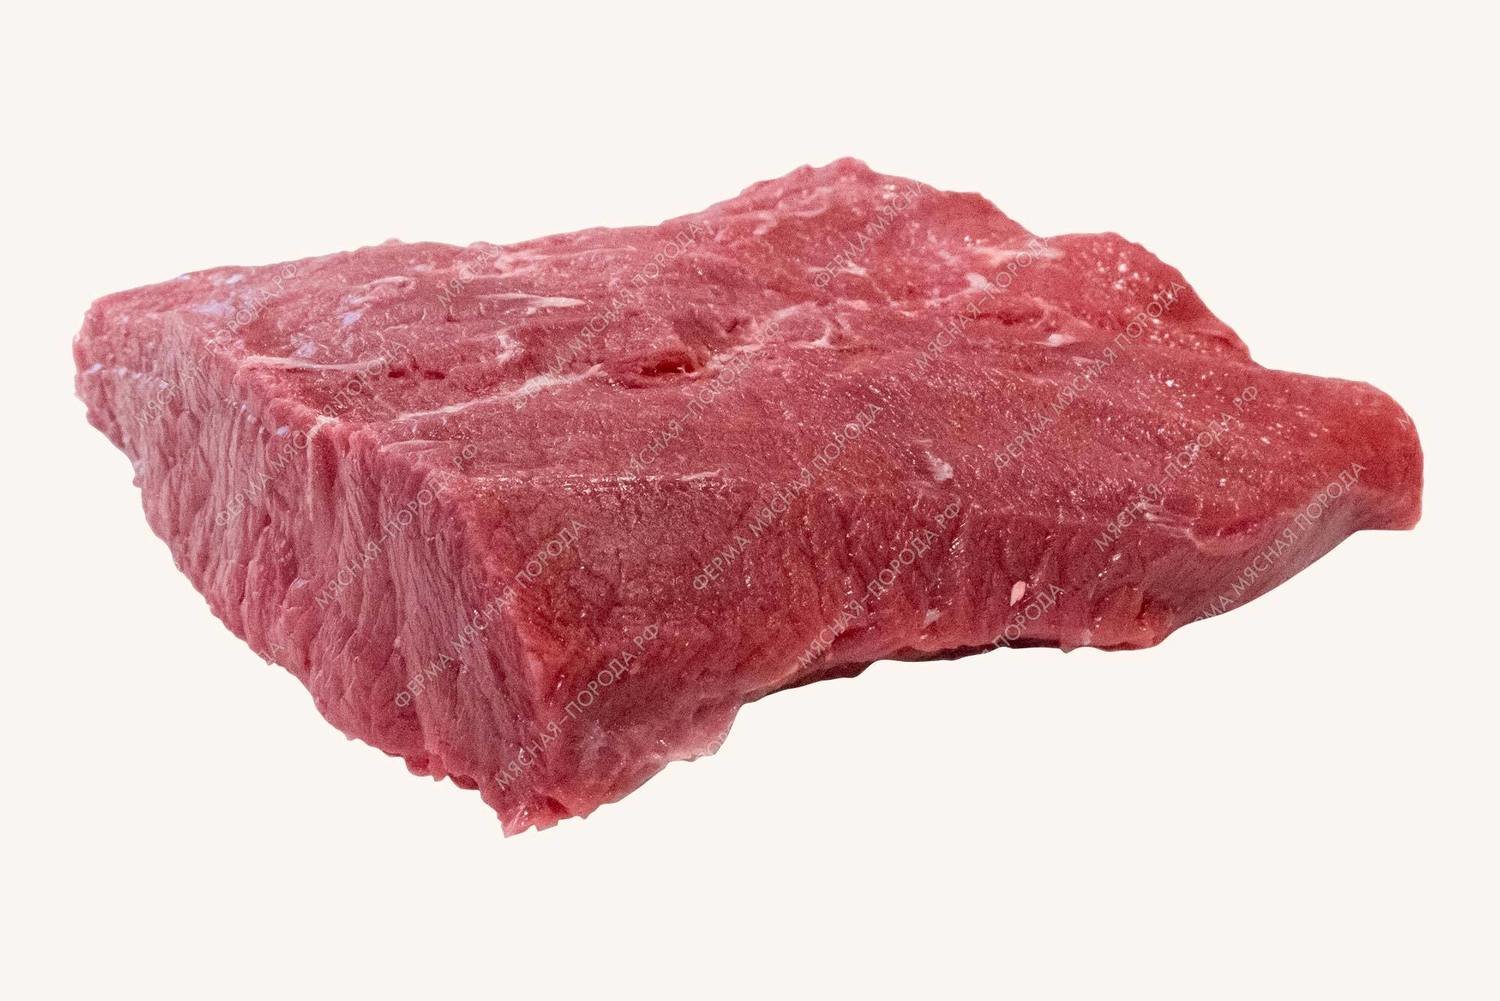 Тонкий край «Сирлойн». Мясо быков — 990 руб./кг